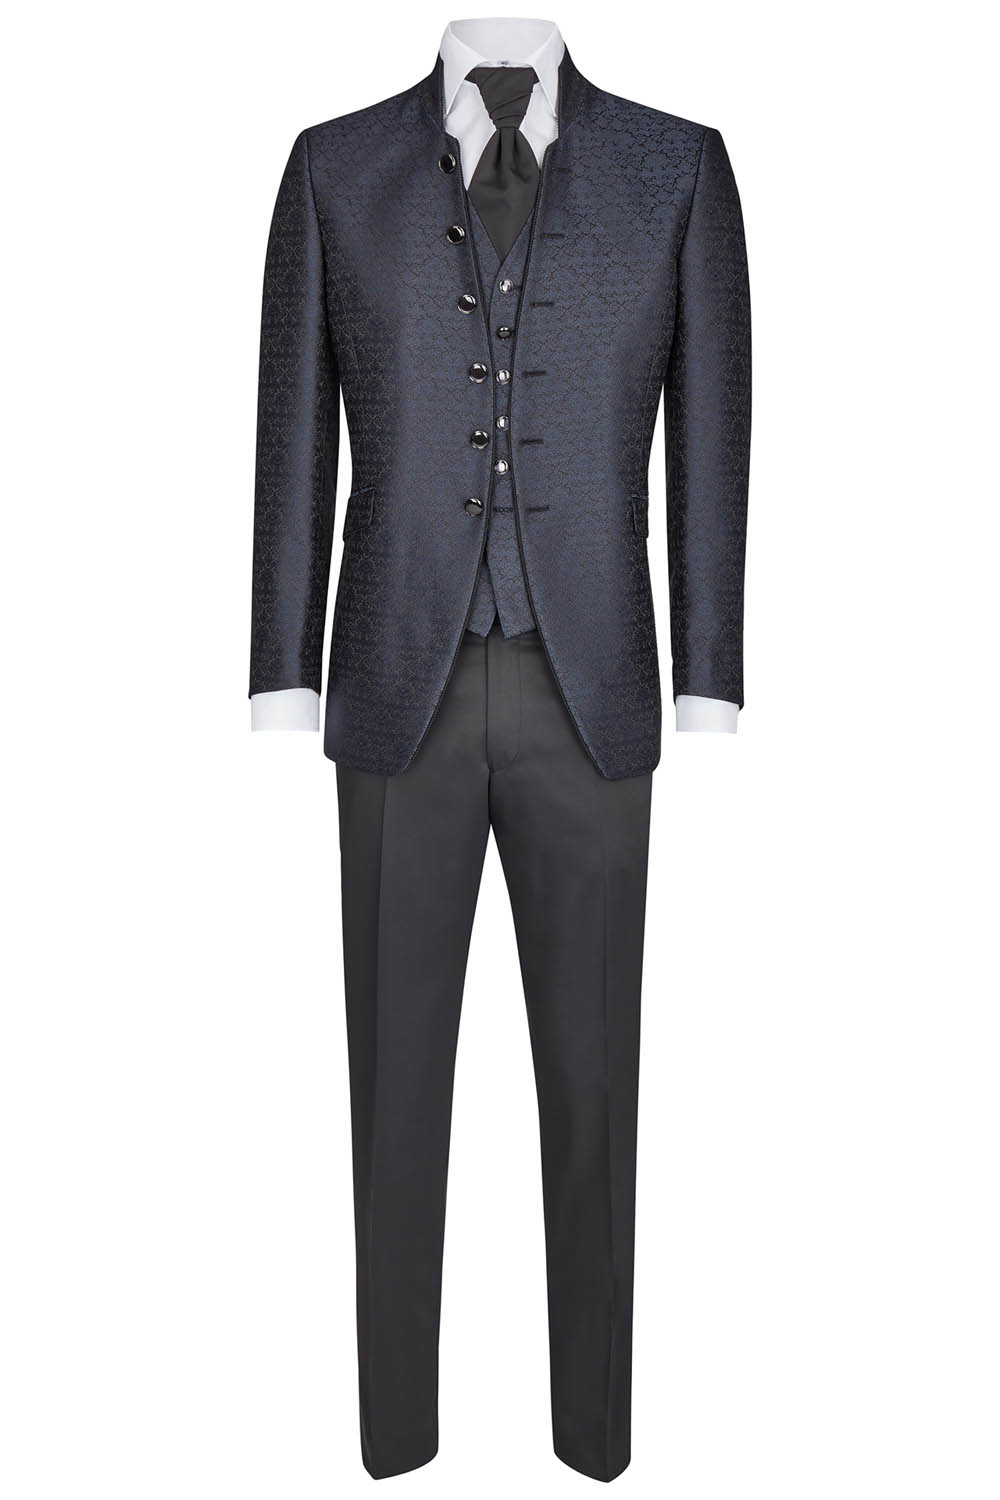 Black Napoleon Jacquard 3 Piece Suit - Tom Murphy's Formal and Menswear